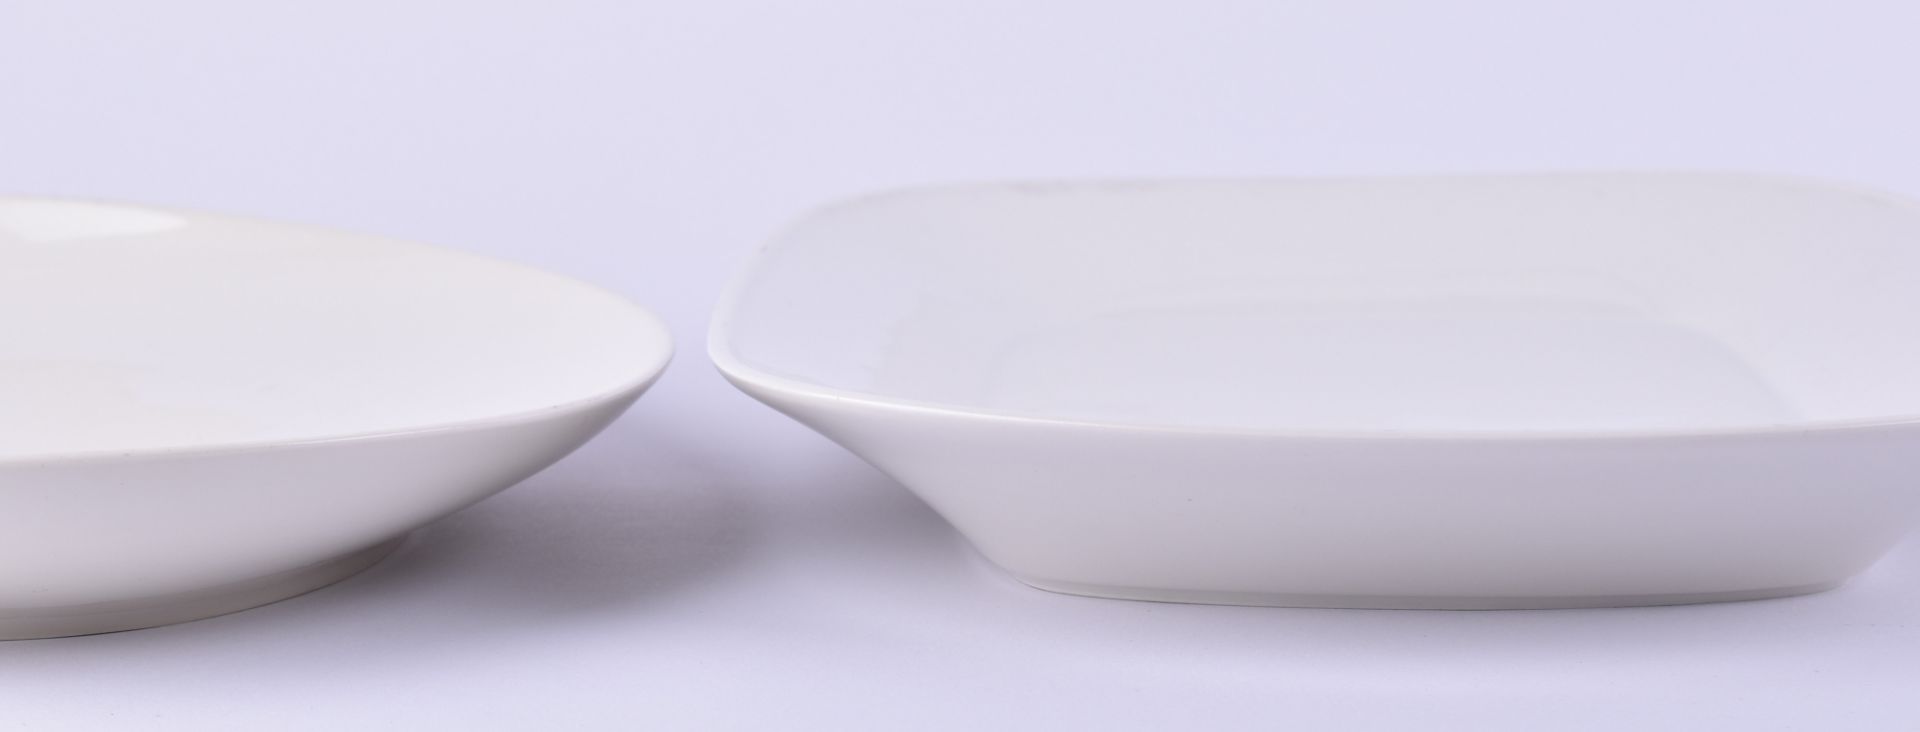 A group of porcelain KPM - Image 2 of 6